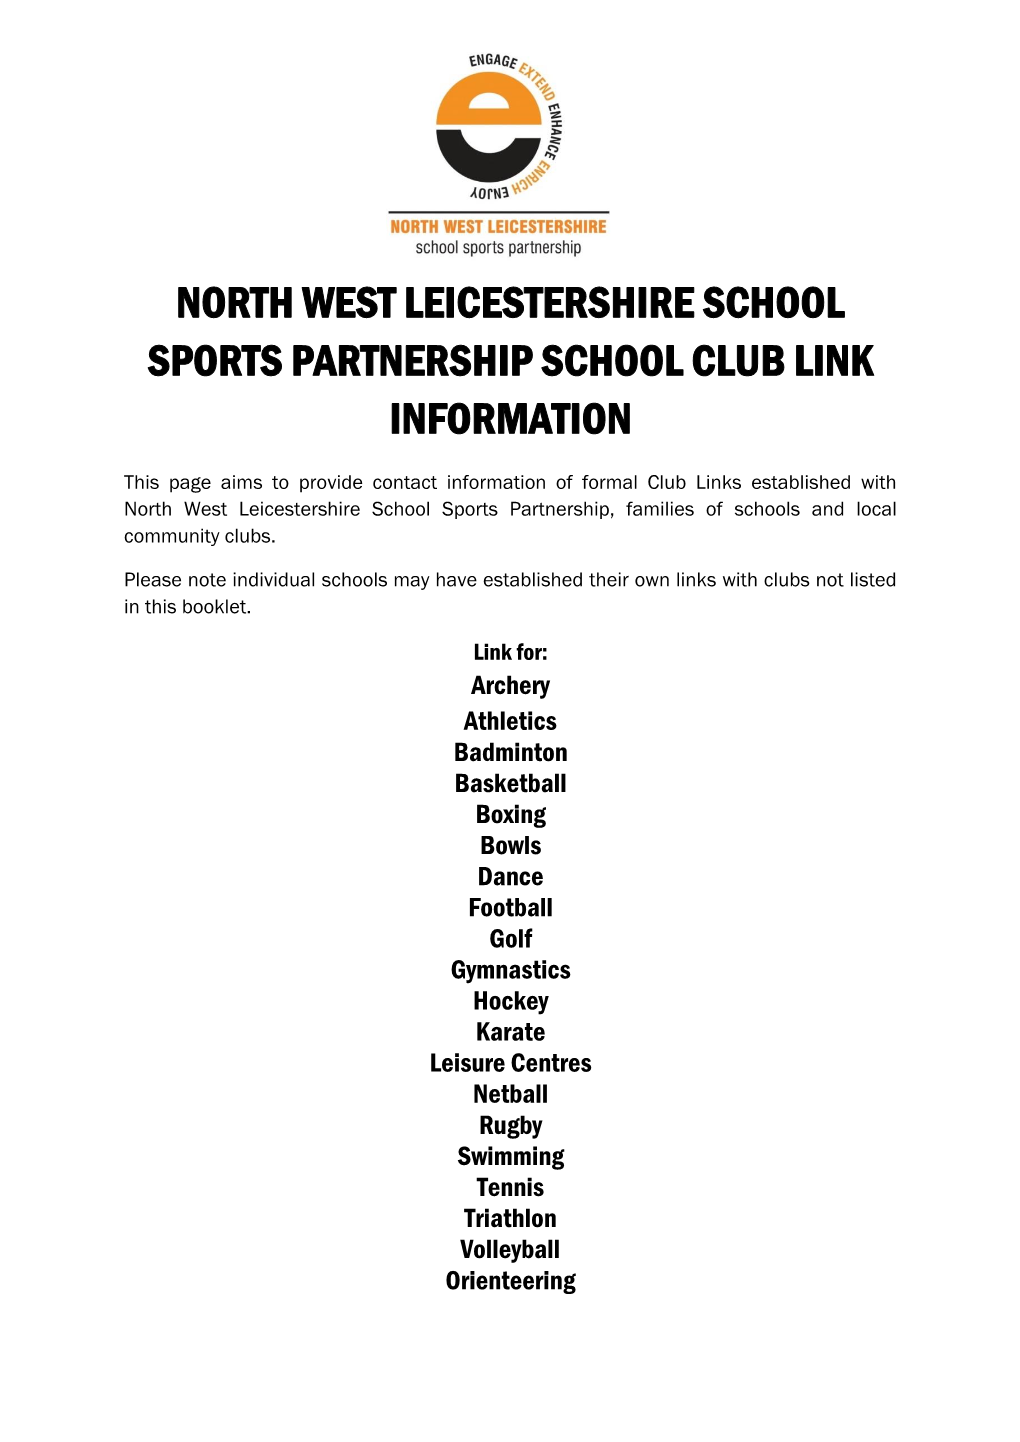 North West Leicestershire School Sports Partnership School Club Link Information